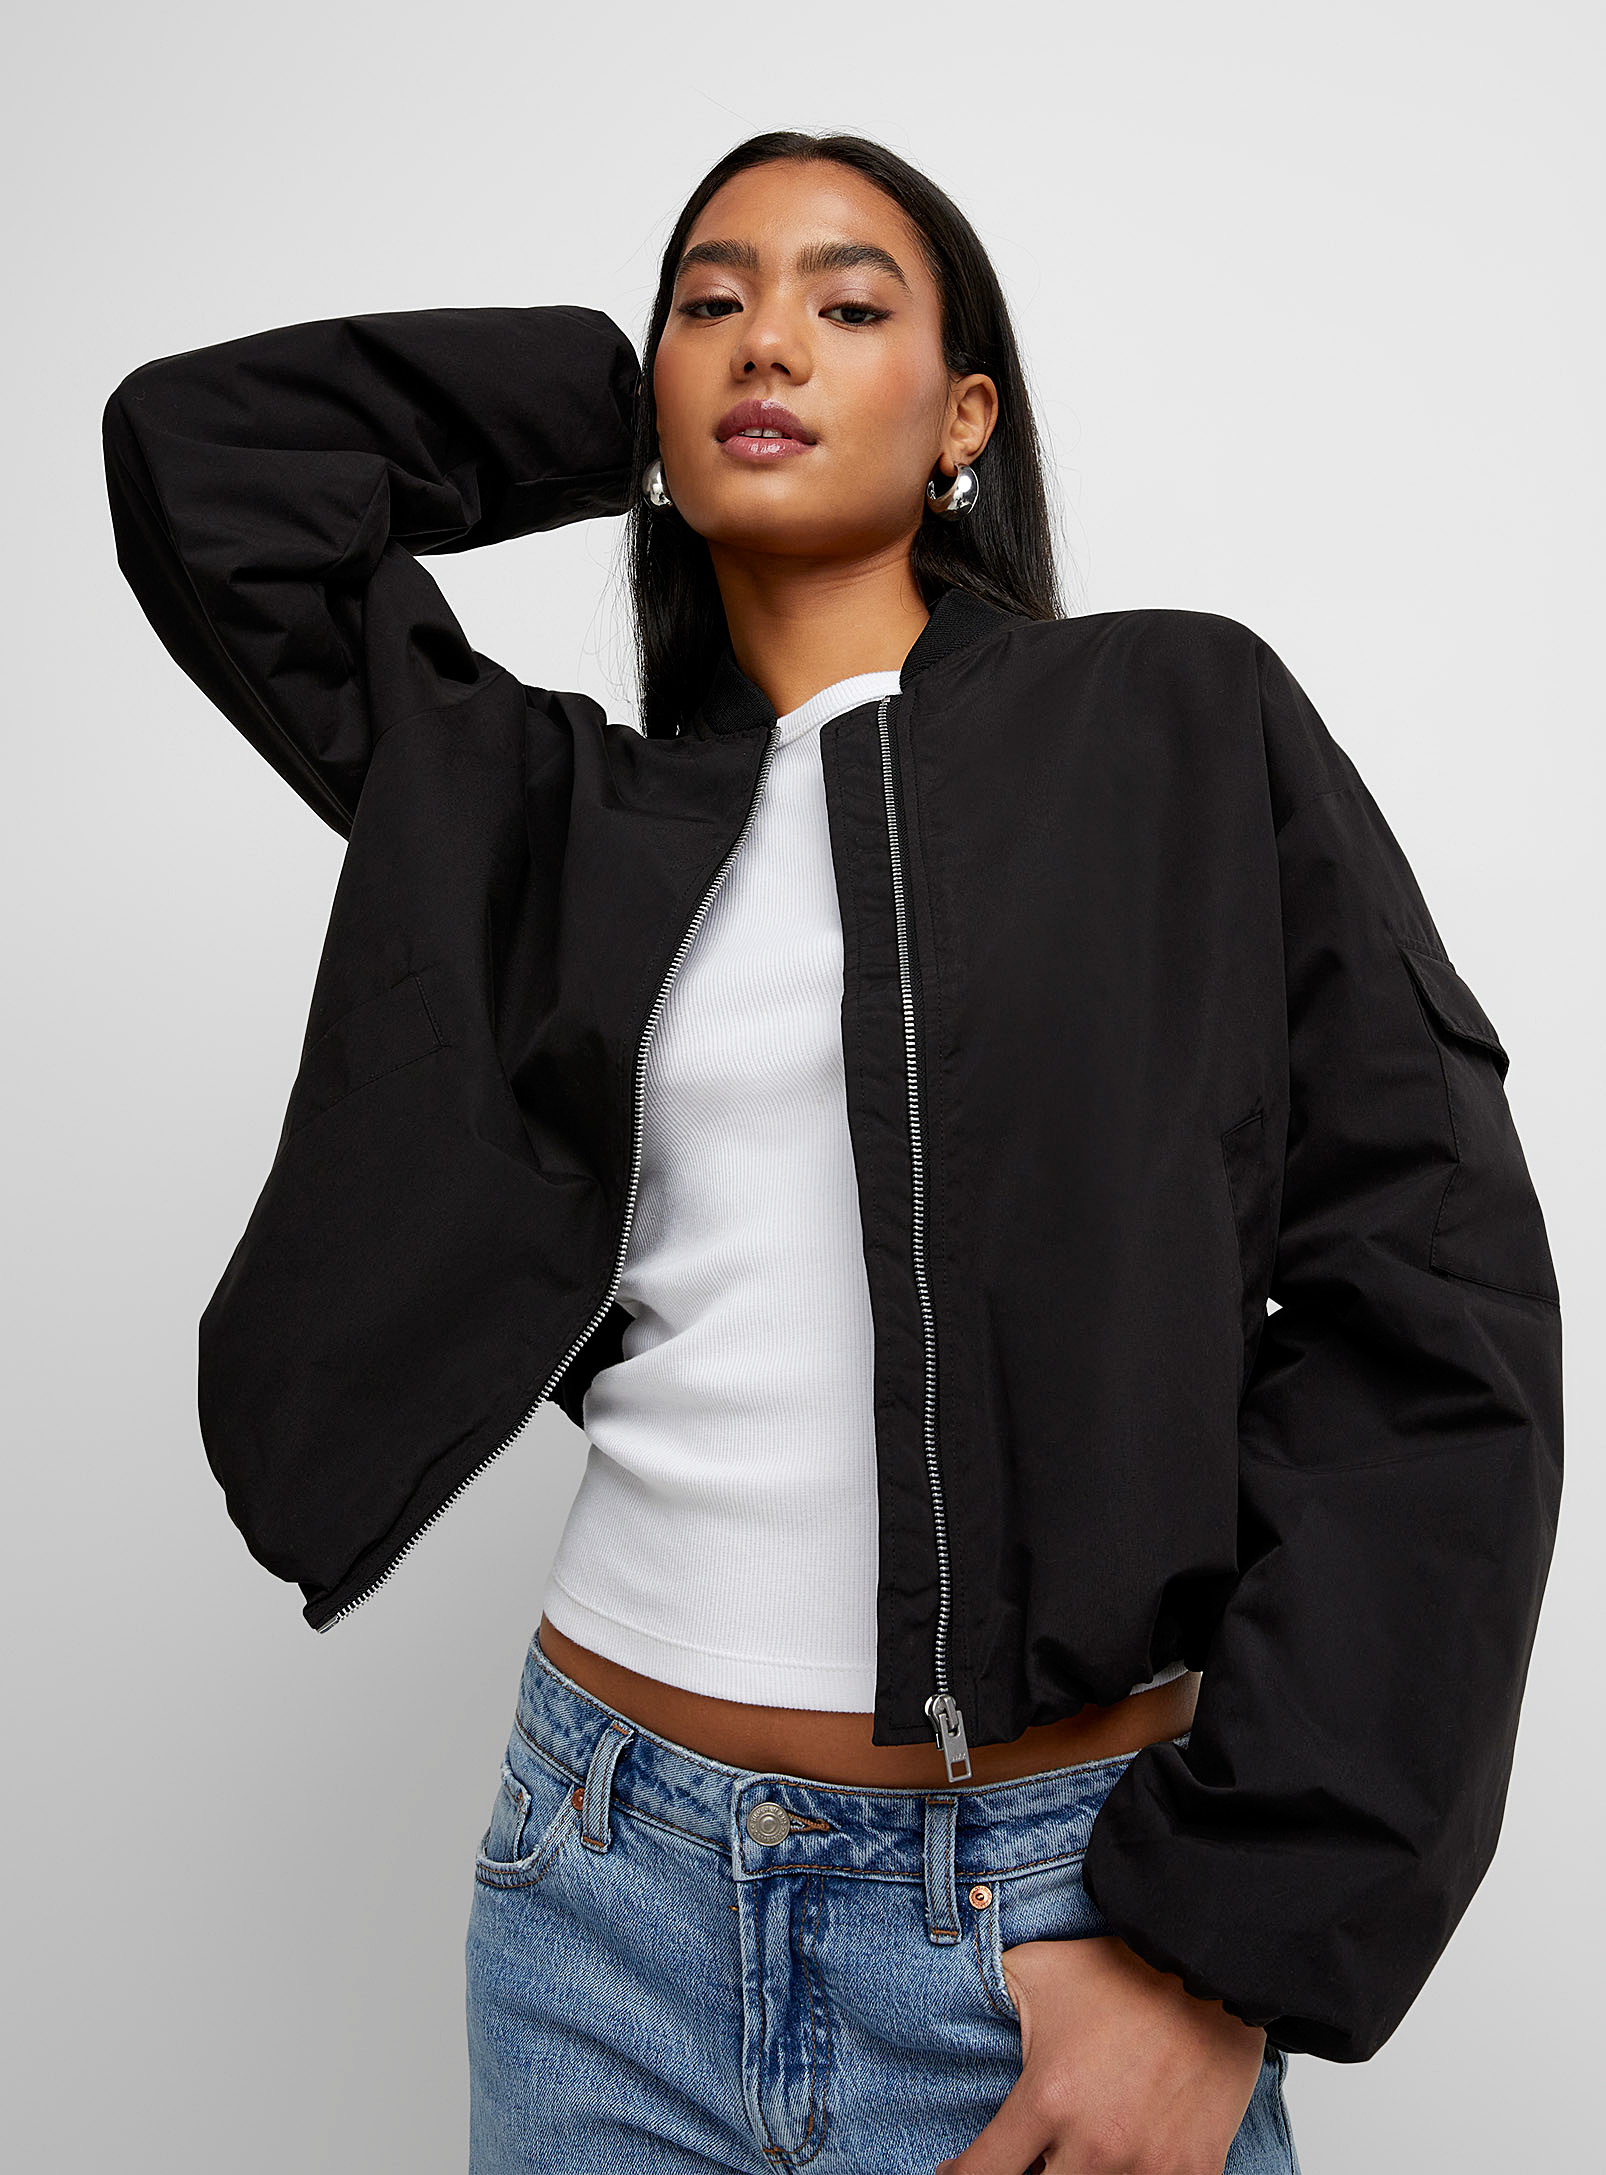 JJXX - Women's Crisp fabric black jacket